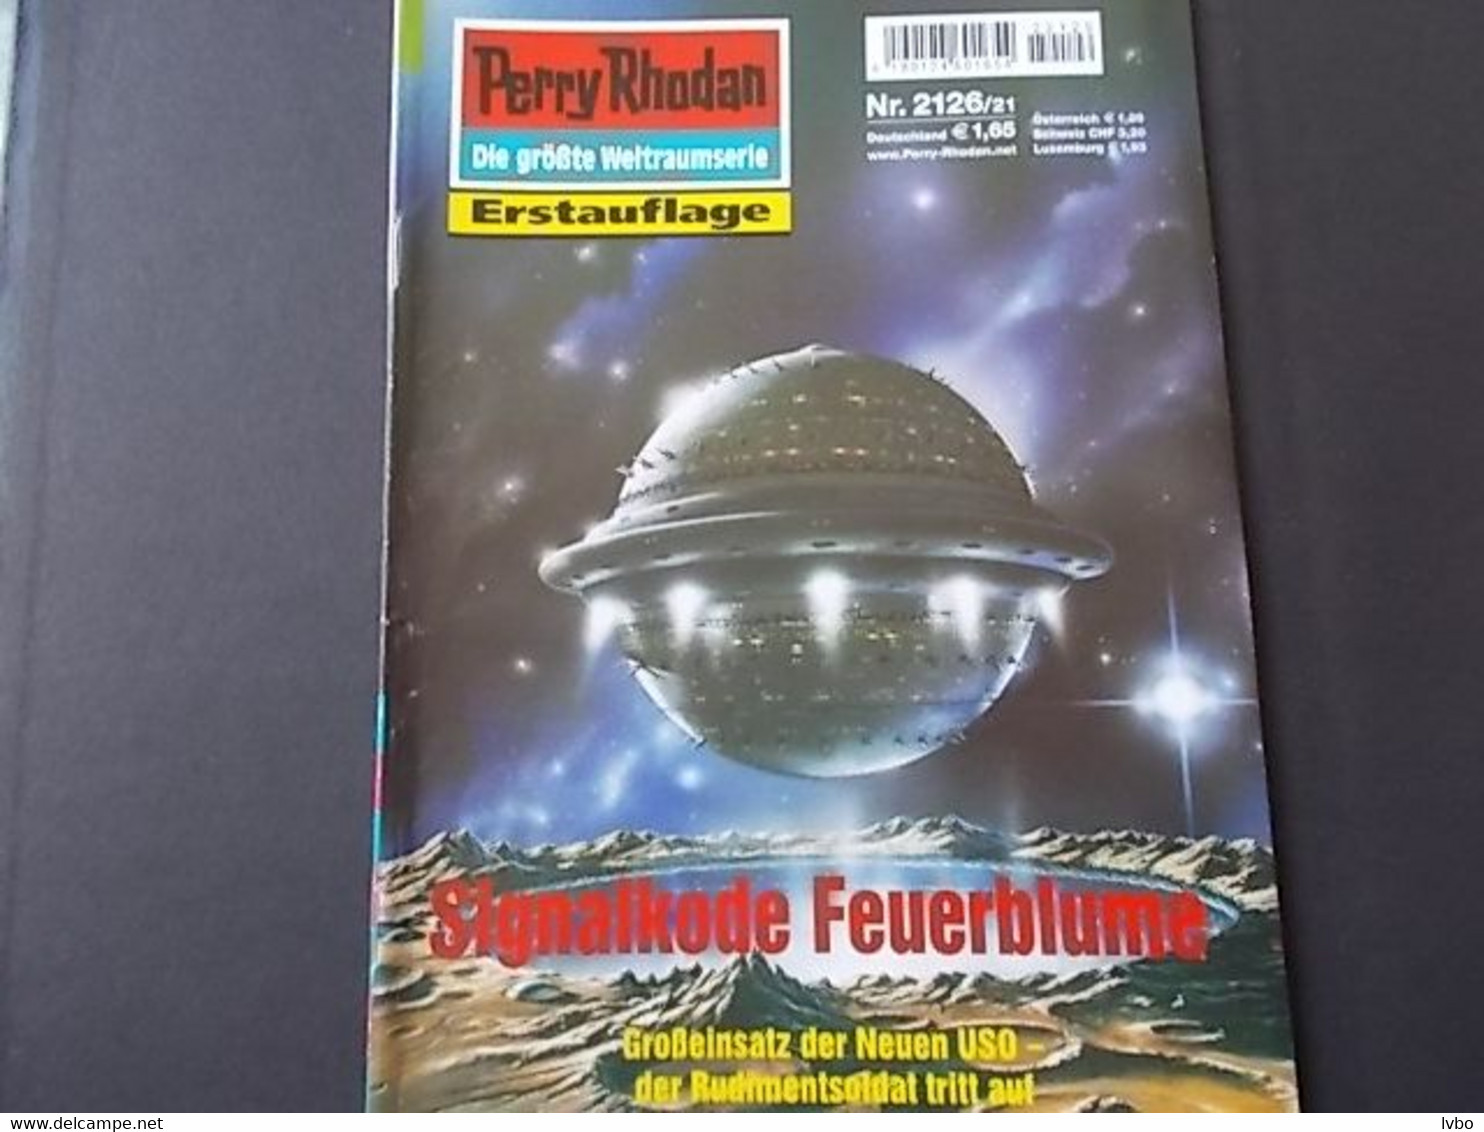 Perry Rhodan Nr 2126 Erstauflage Signalkode Feuerblume - Sciencefiction